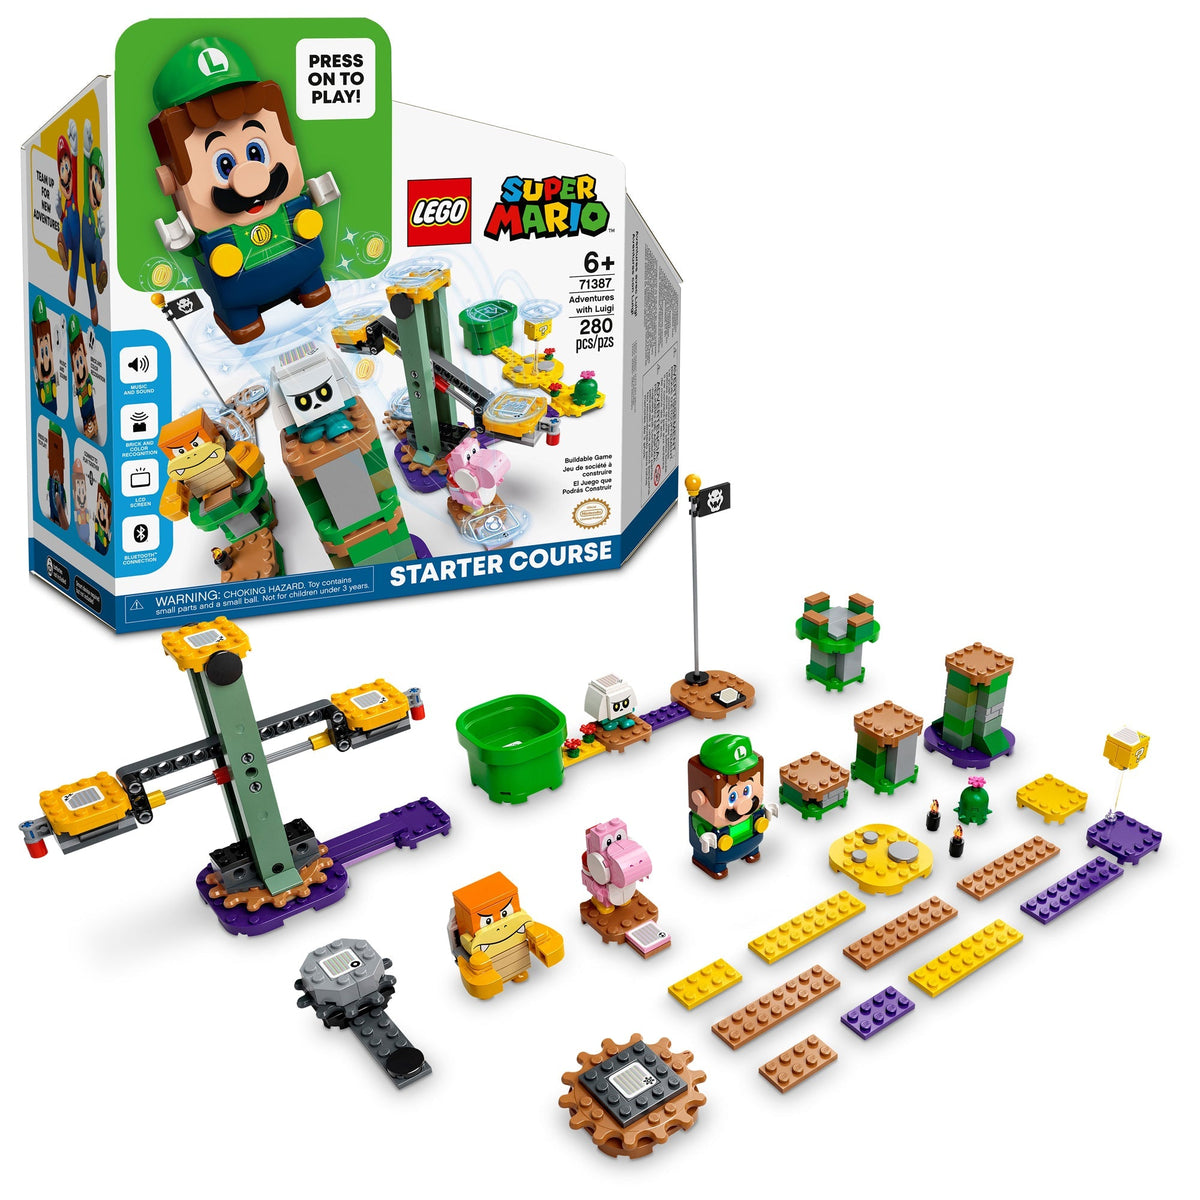 LEGO Toys & Games LEGO Super Mario Adventures with Luigi Starter Course, 71387, Ages 6+, 280 Pieces